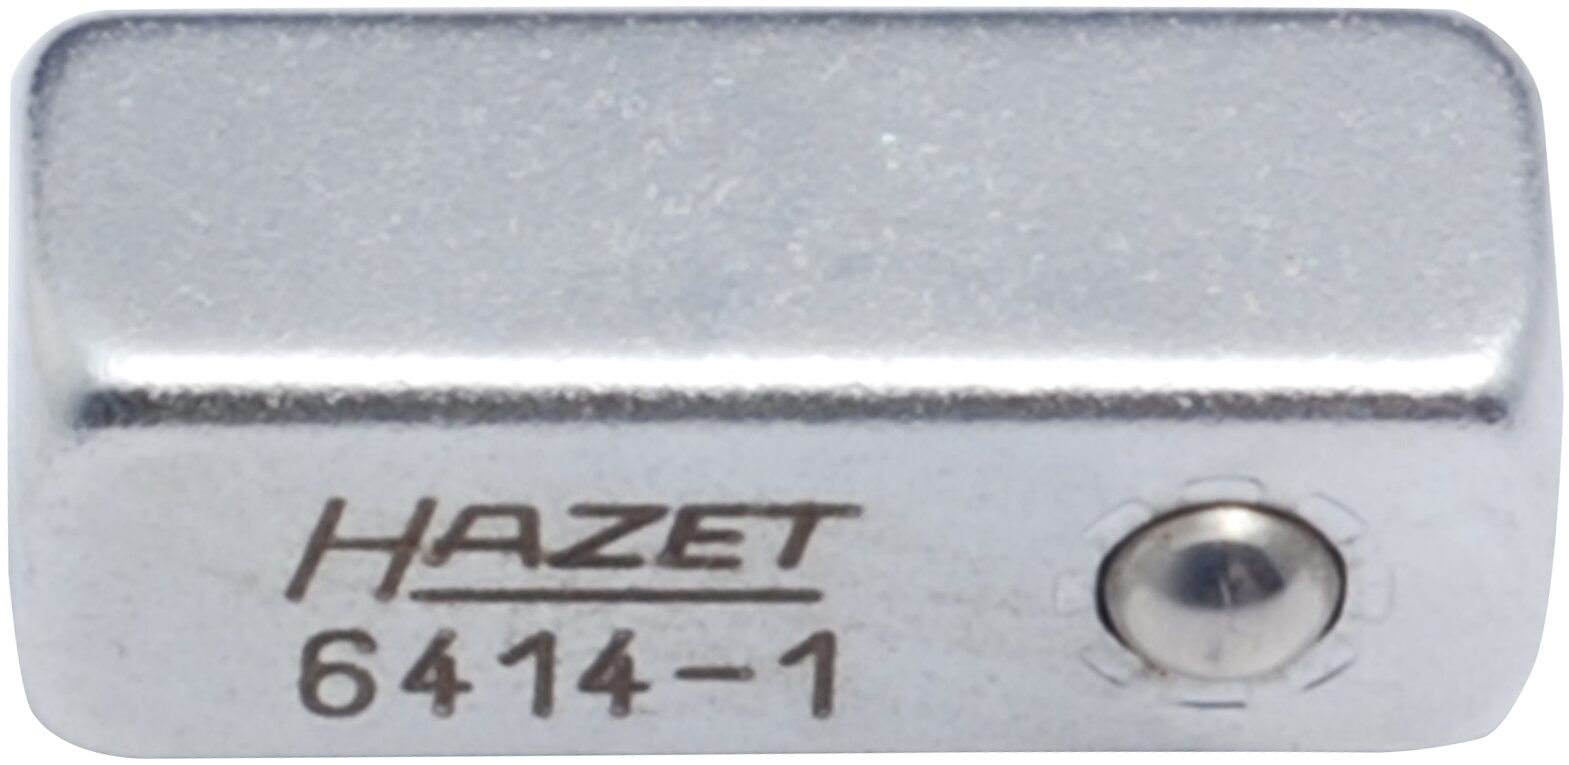 HAZET Durchsteck-Vierkant 6414-1 · Vierkant massiv 12,5 mm (1/2 Zoll)